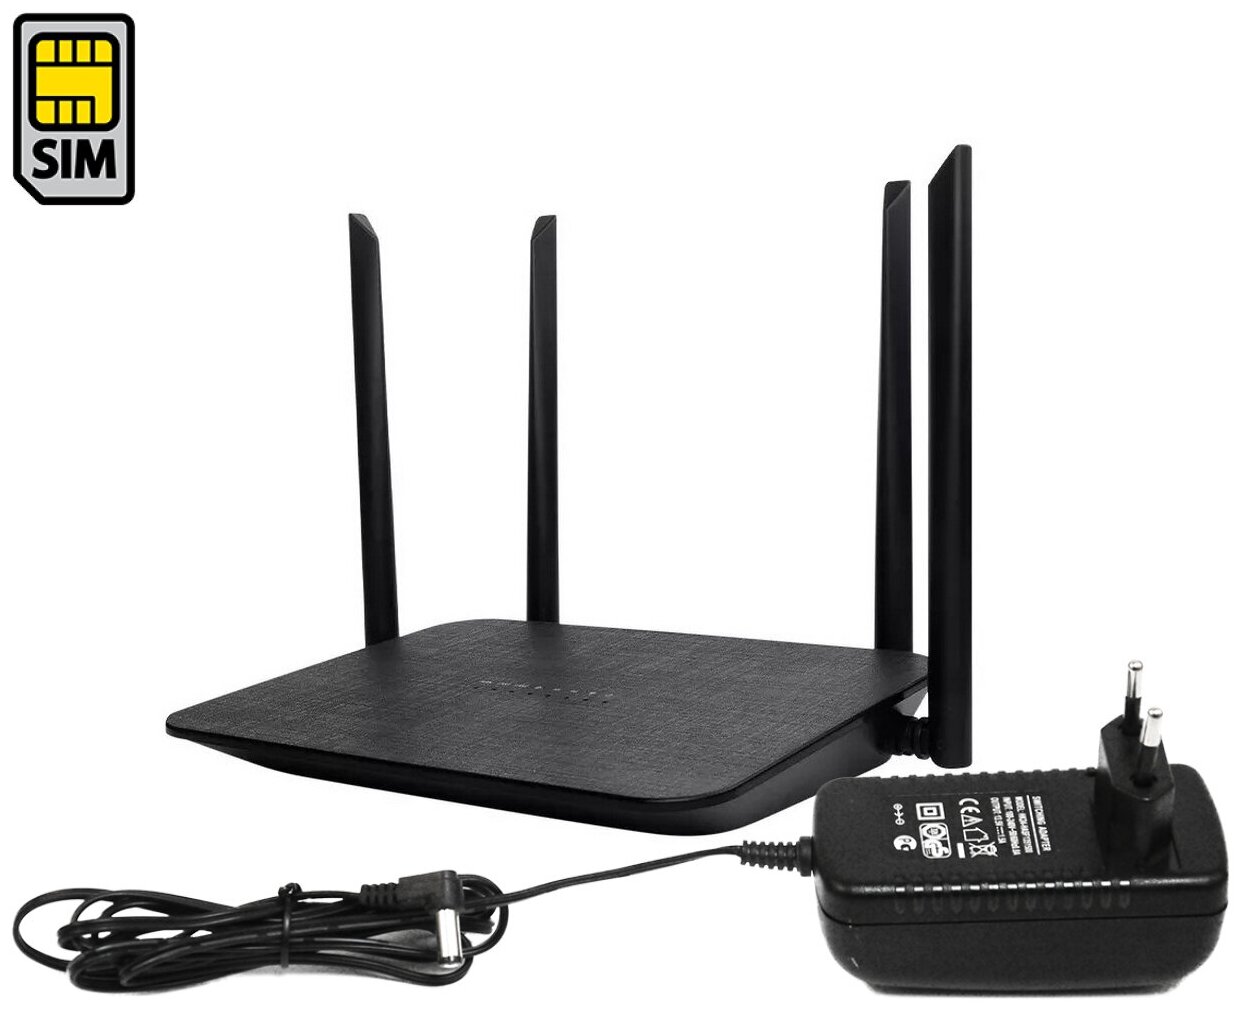 Wi-Fi роутеры 3G/4G с СИМ картой HDком С80-4G (Черный) (F1506EU) и 4G-lte модемом - Wi-Fi 3G/4G/LTE маршрутизатор Модемы 4g для интернета